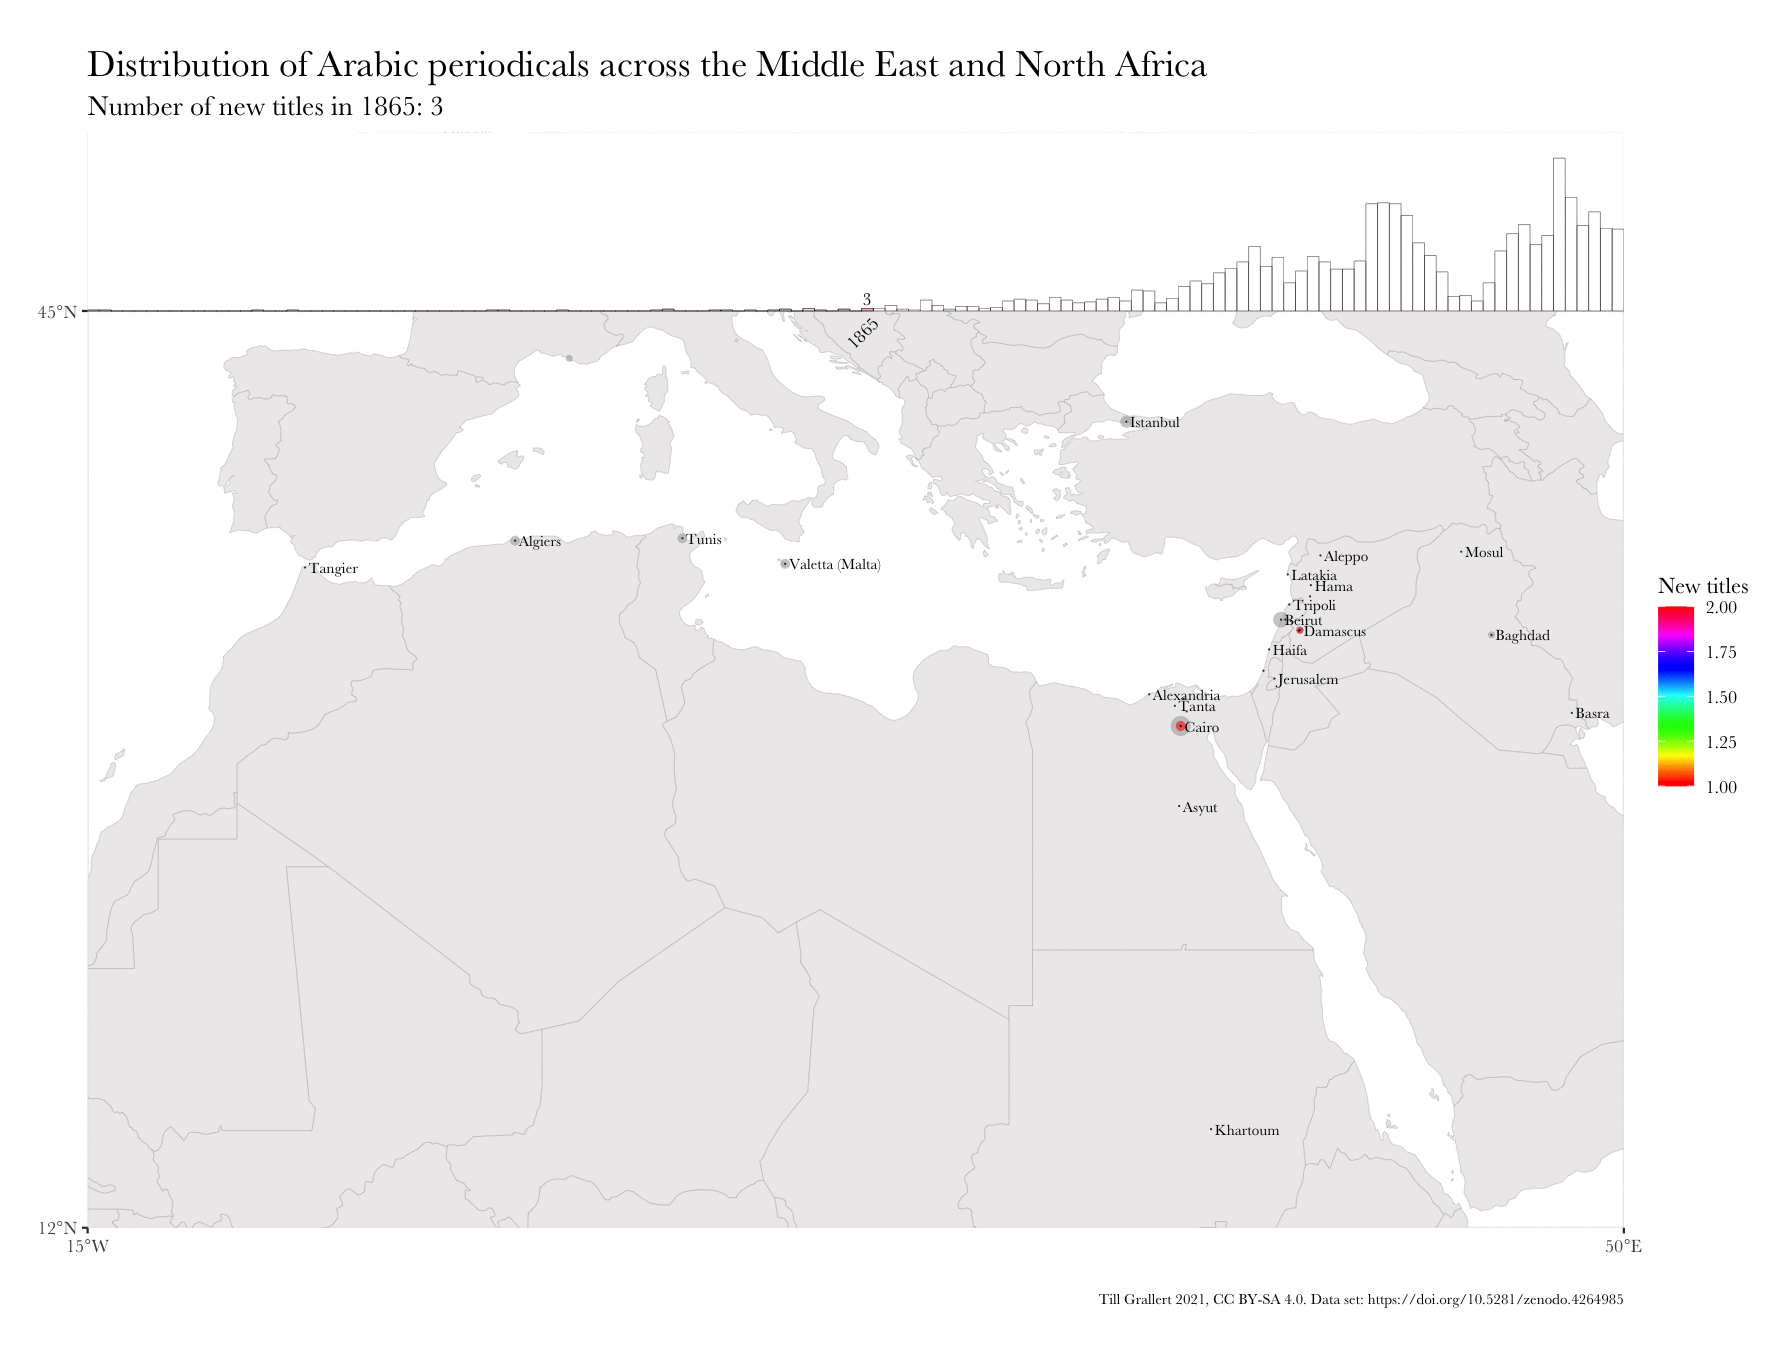 Distribution of Arabic Periodicals Per Year, 1800-1929